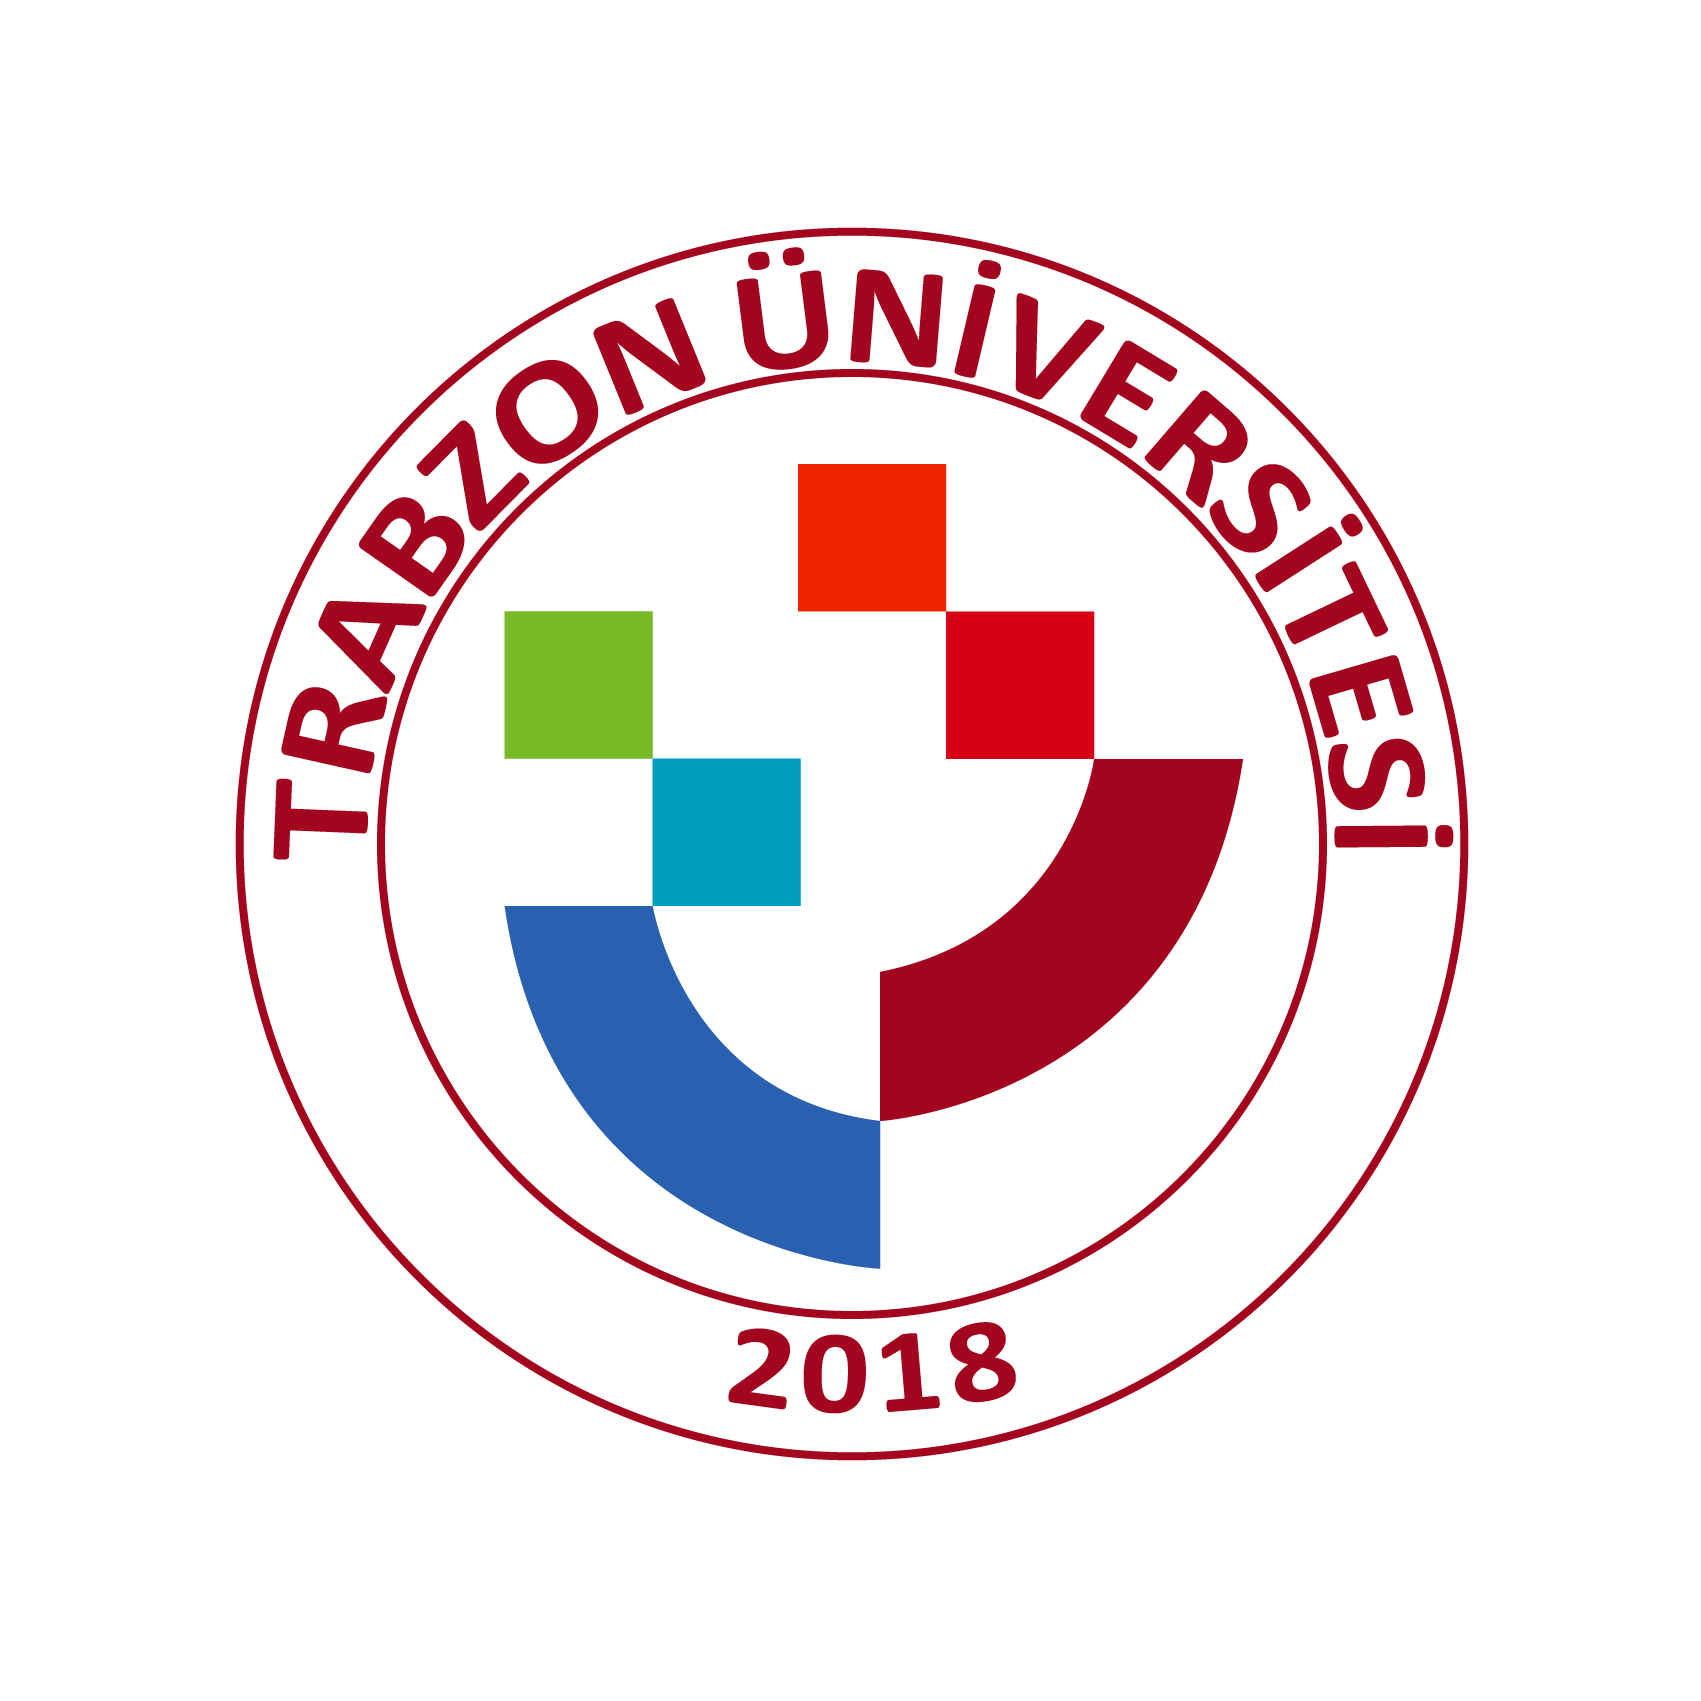 Trabzon Üniversitesi yjty t